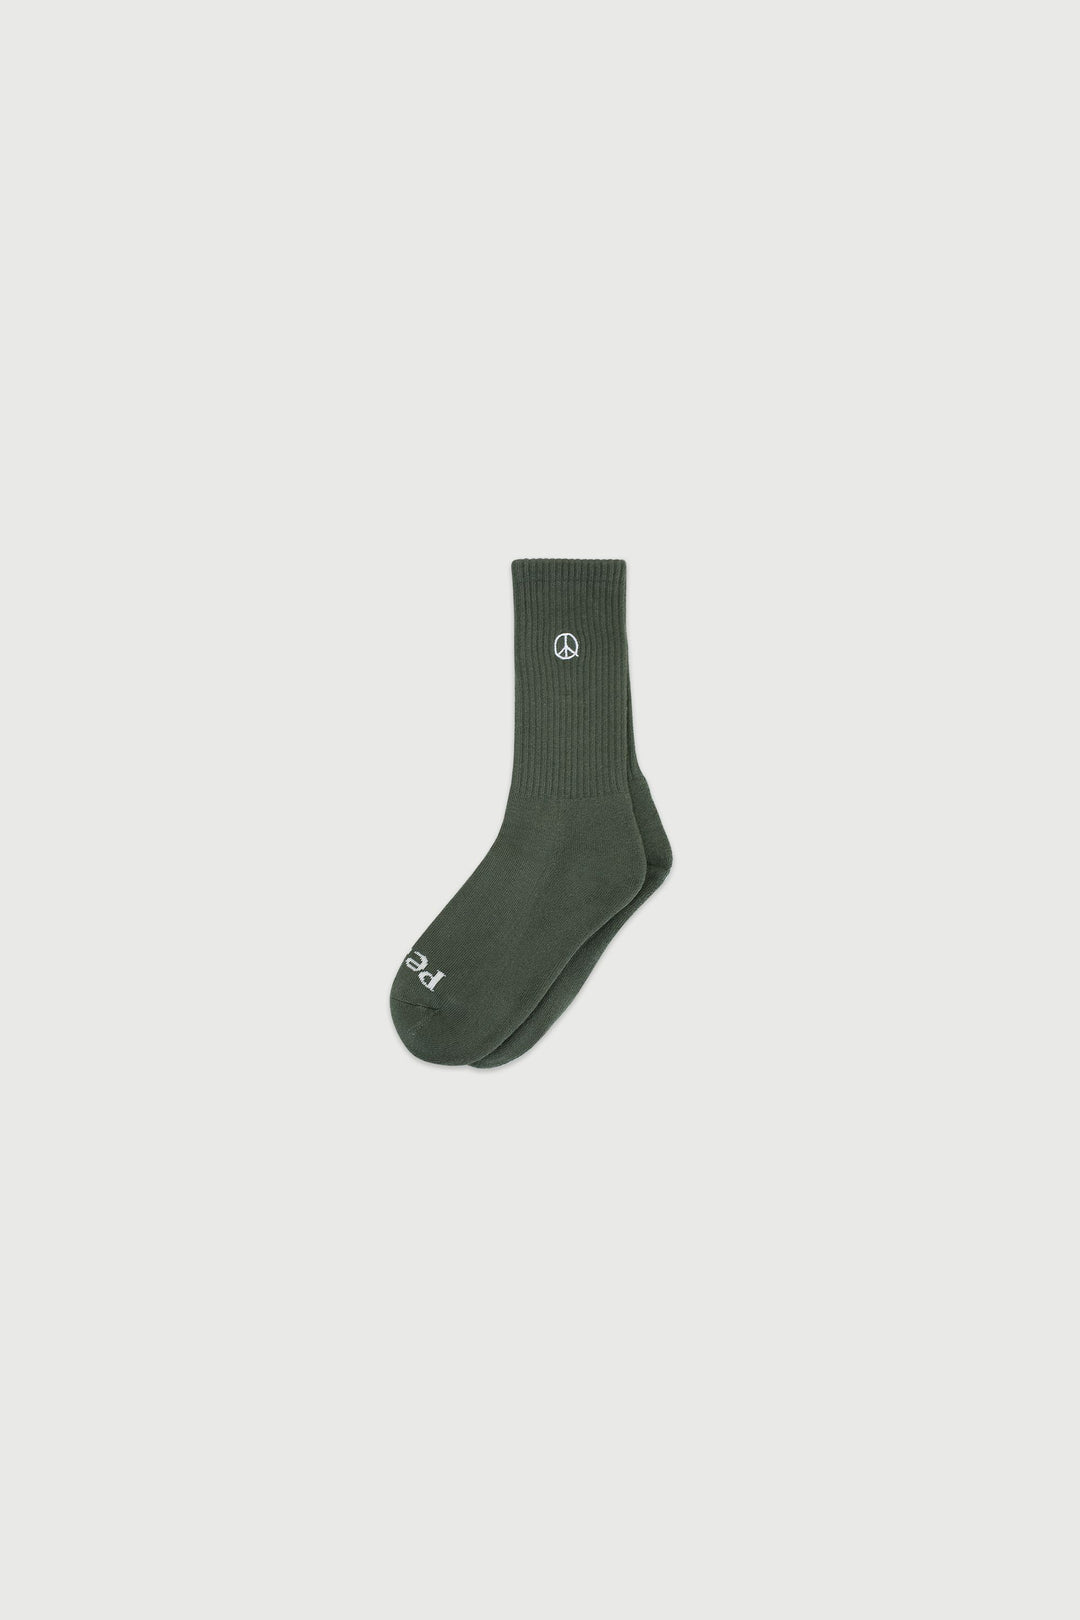 Icon Socks - Olive